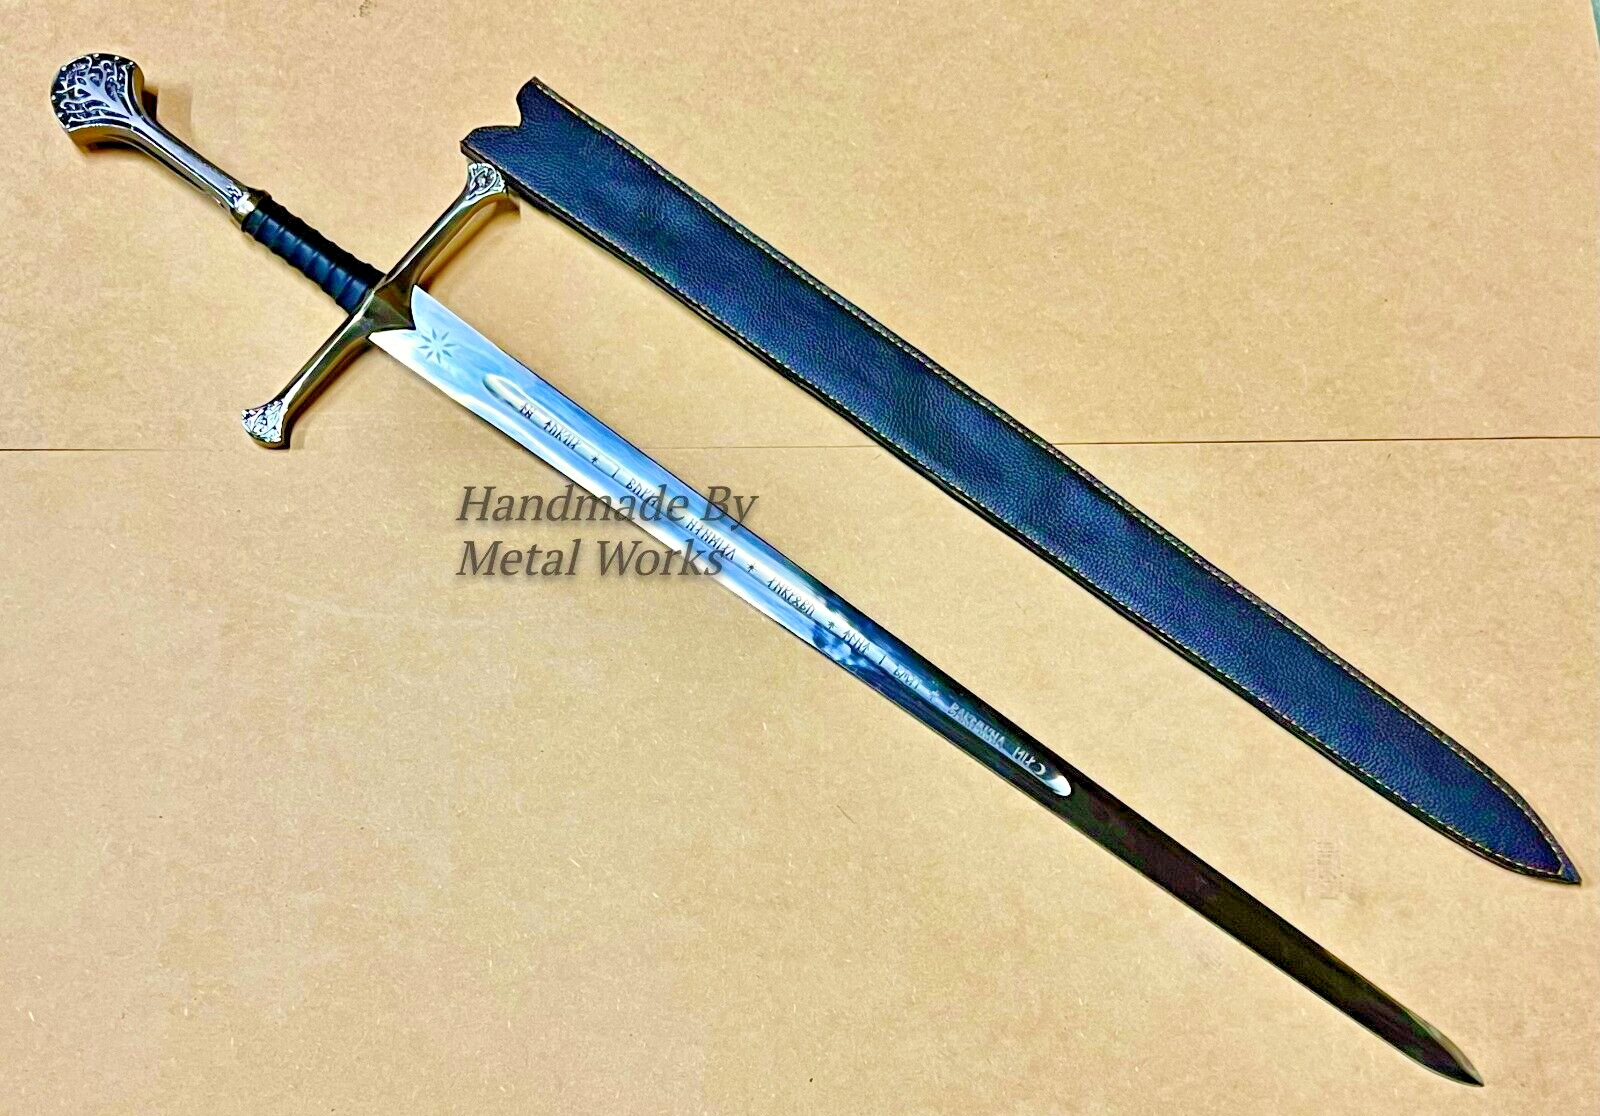 Handmade Anduril Sword With Sheath, Cosplay Replica Sword